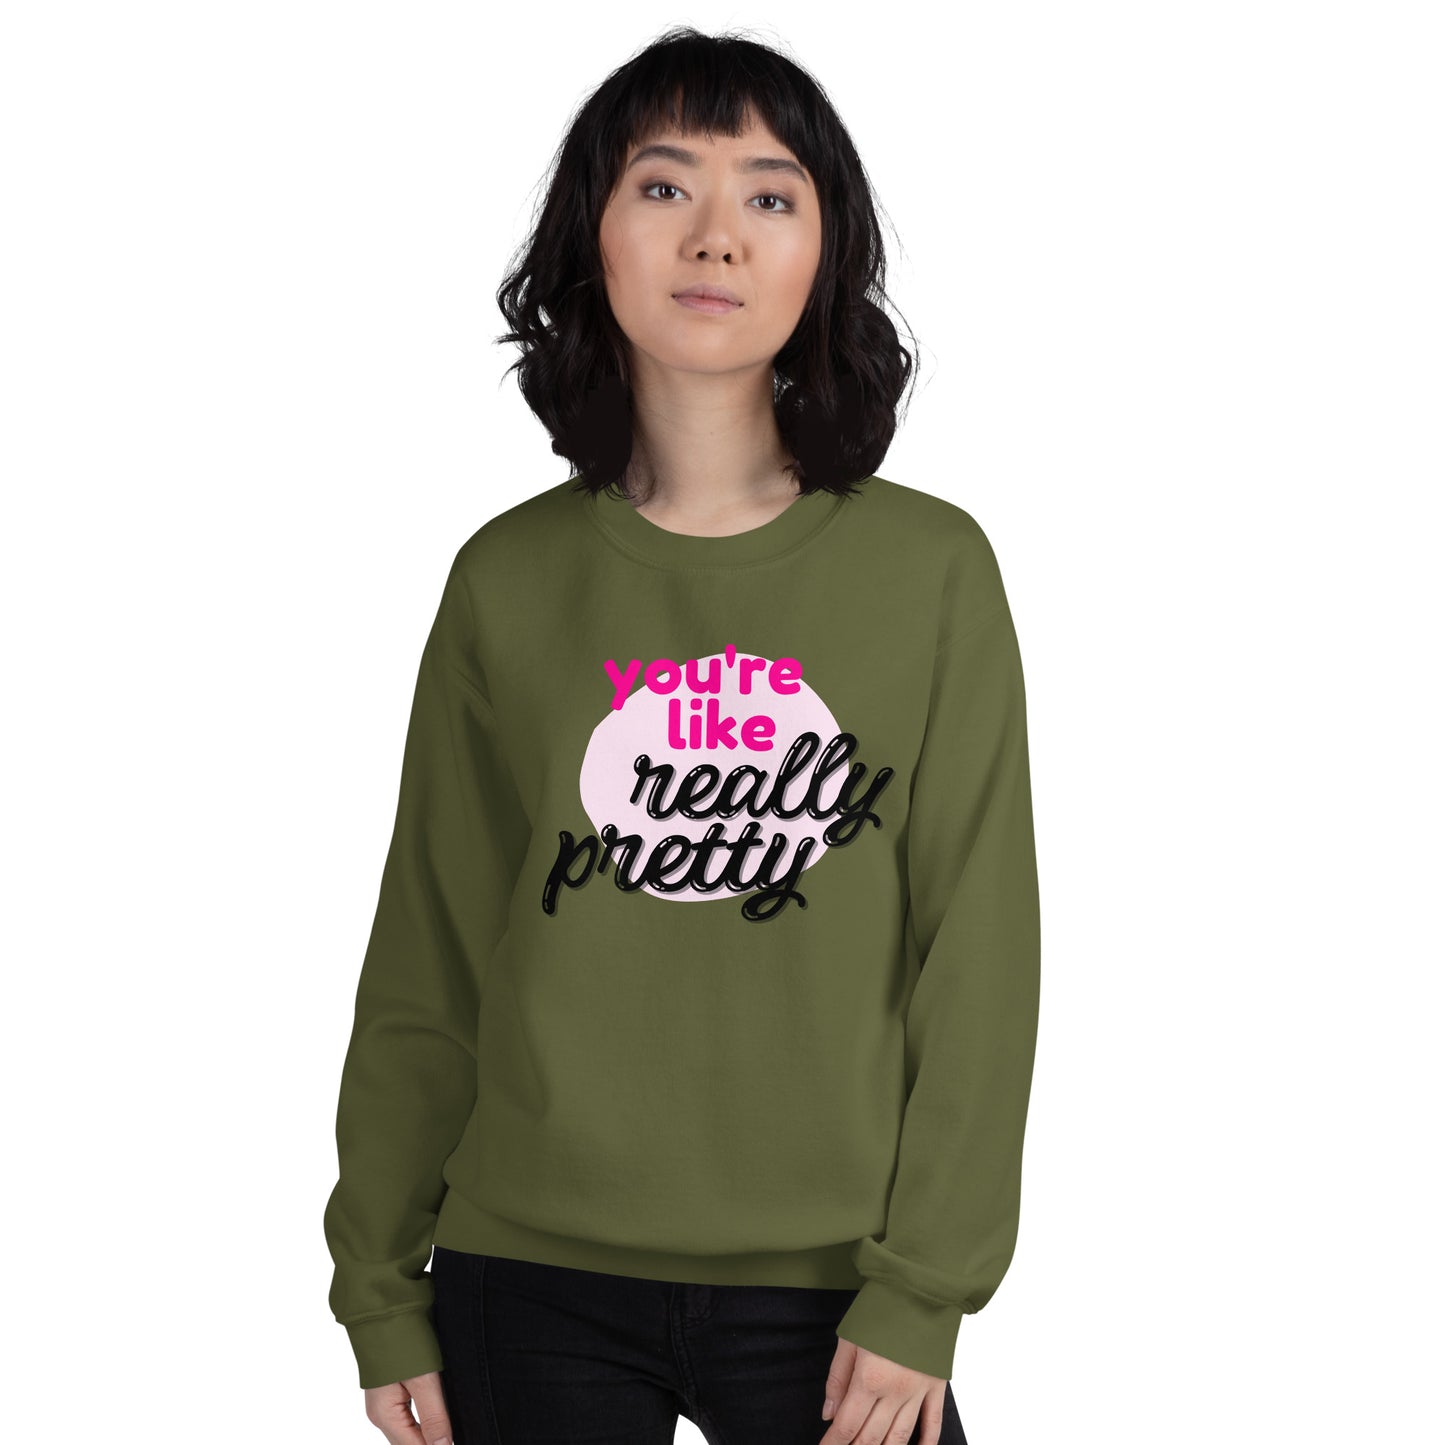 Mean Girls - You're like really pretty Sweatshirt